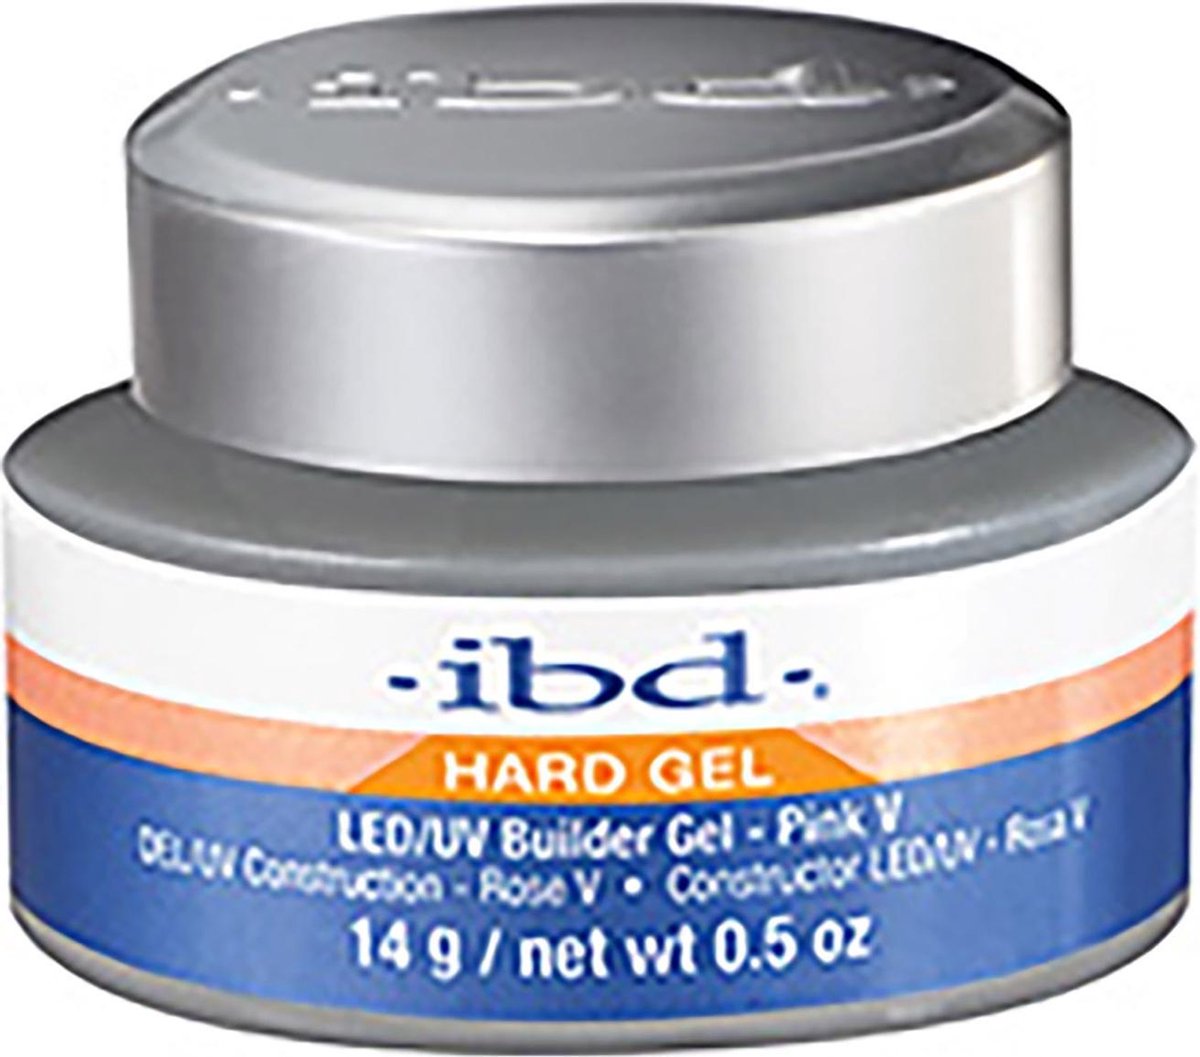 ibd - Hard Gel - LED/UV Builder Gel - Pink V - 14 gr